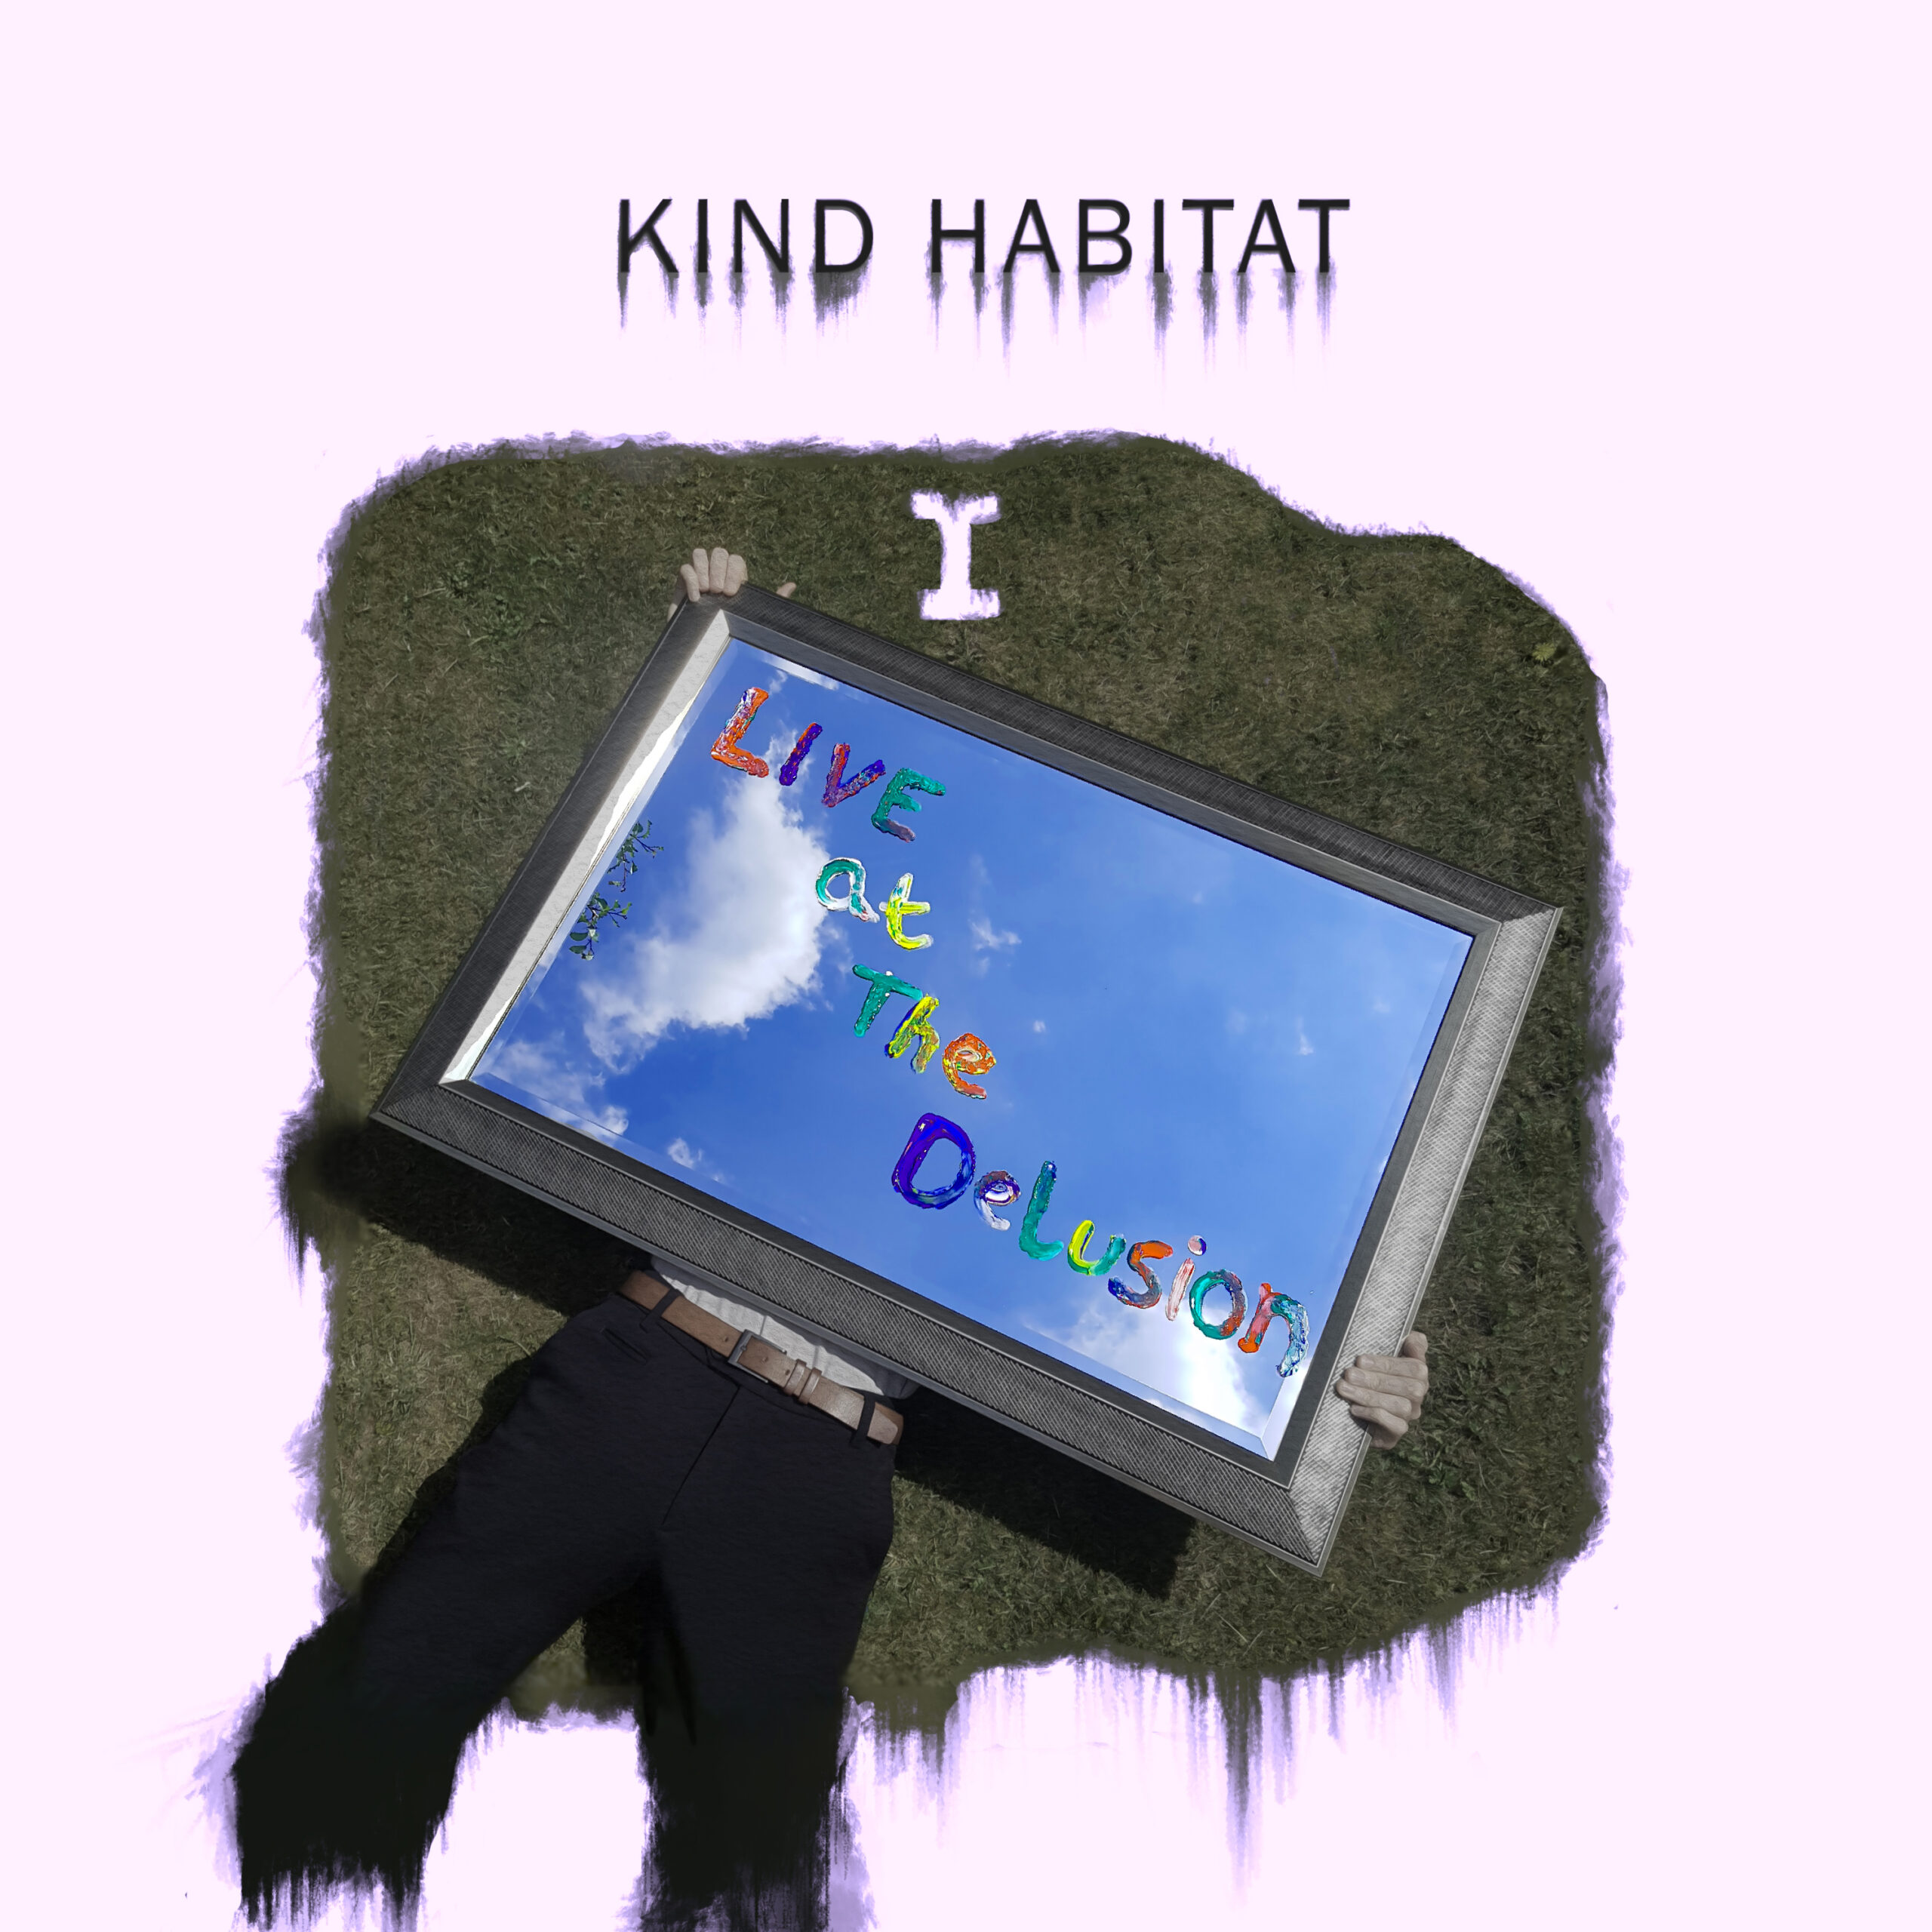 EXCLUSIVE: Kind Habitat let loose alt-rock debut album - Listen Now 